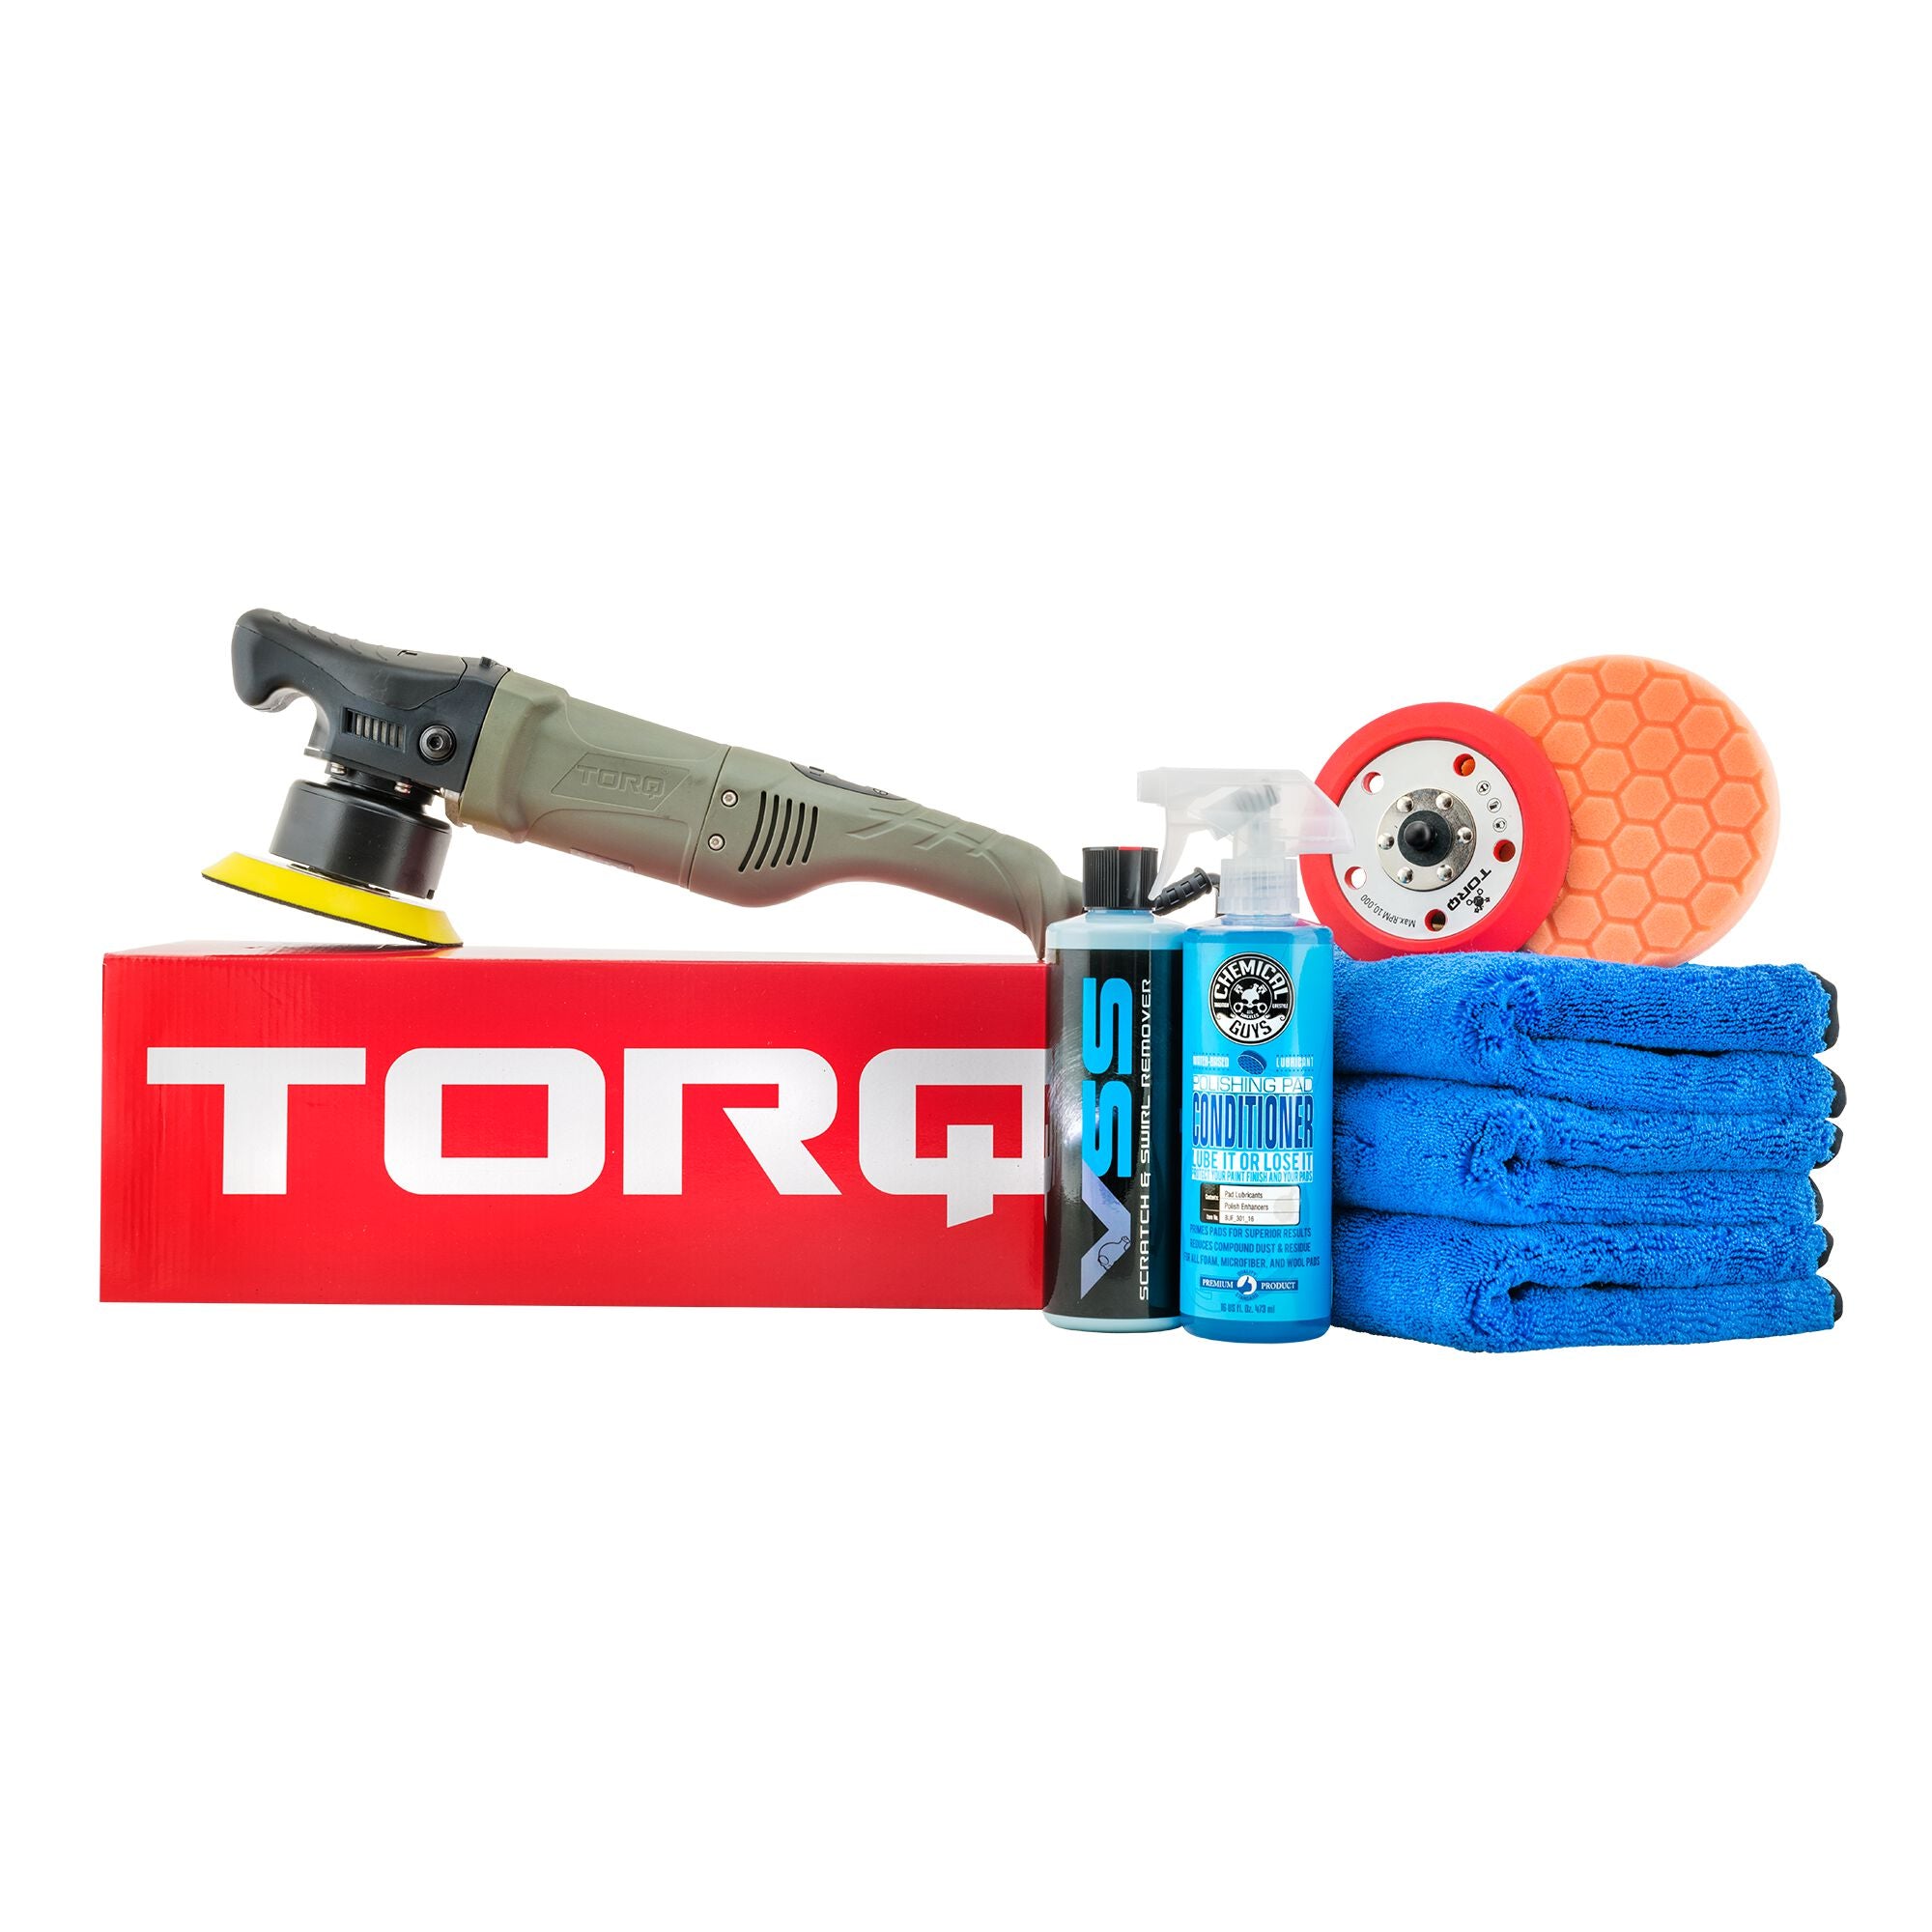 TORQ10FX Random Orbital Polisher Kit 1-Step Scratch &Swirl Remover